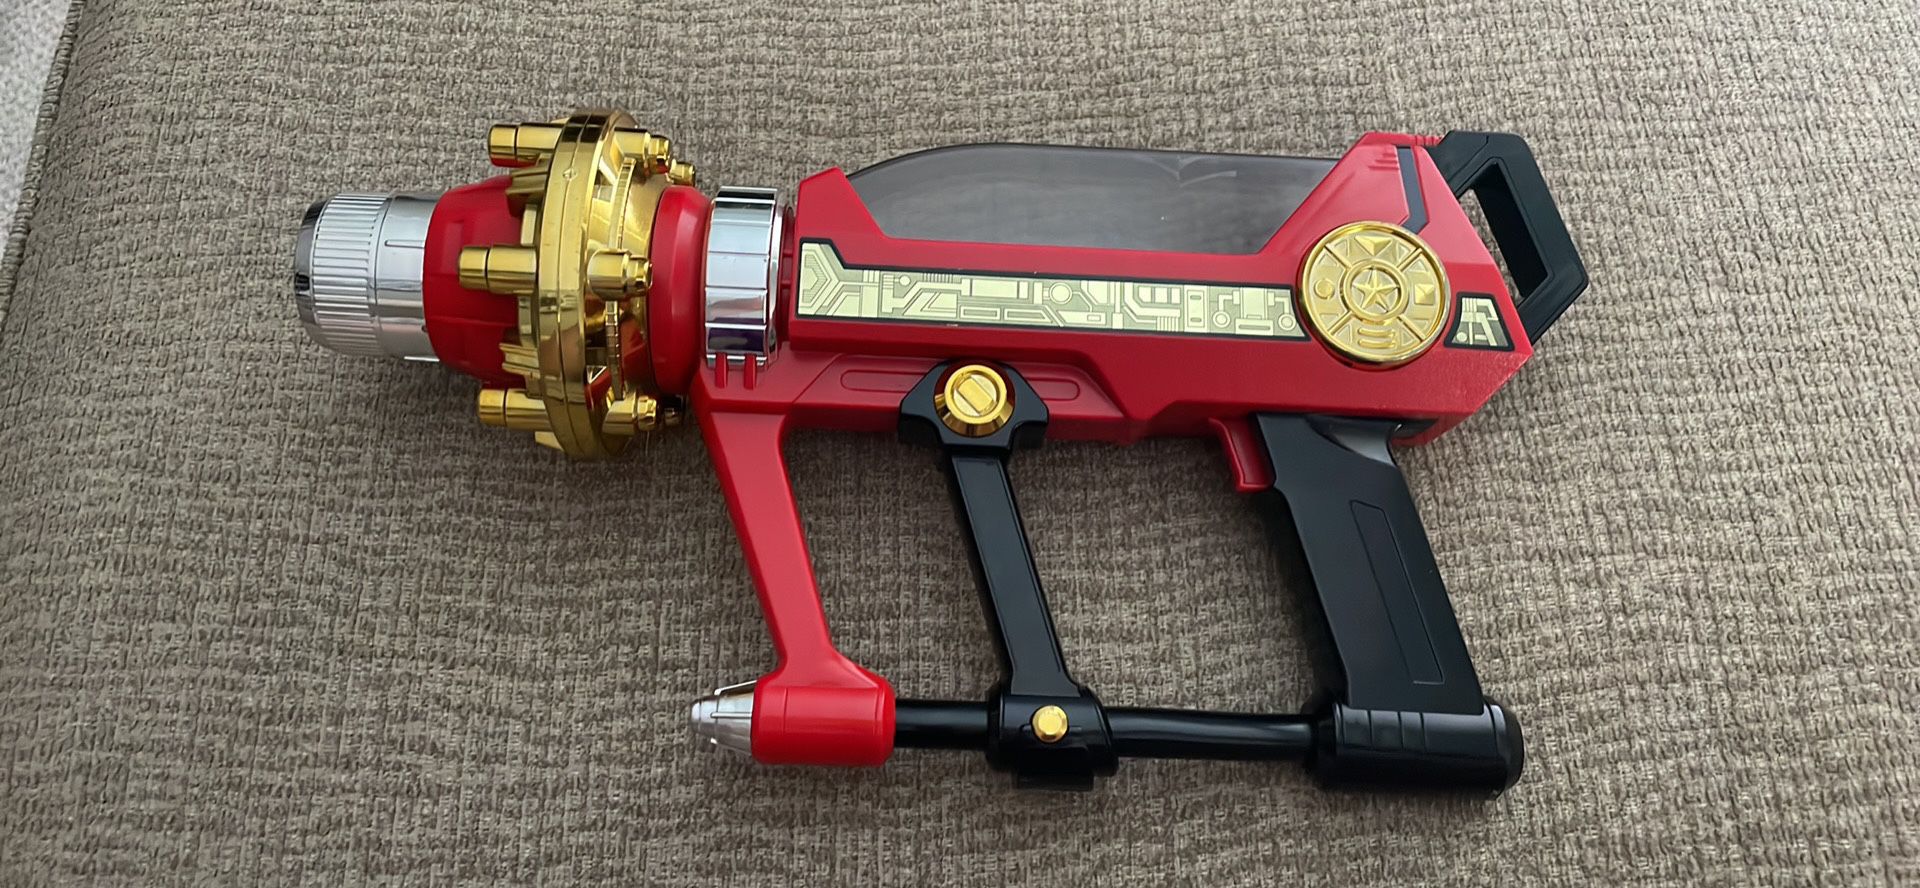 Power Rangers Toy Gun